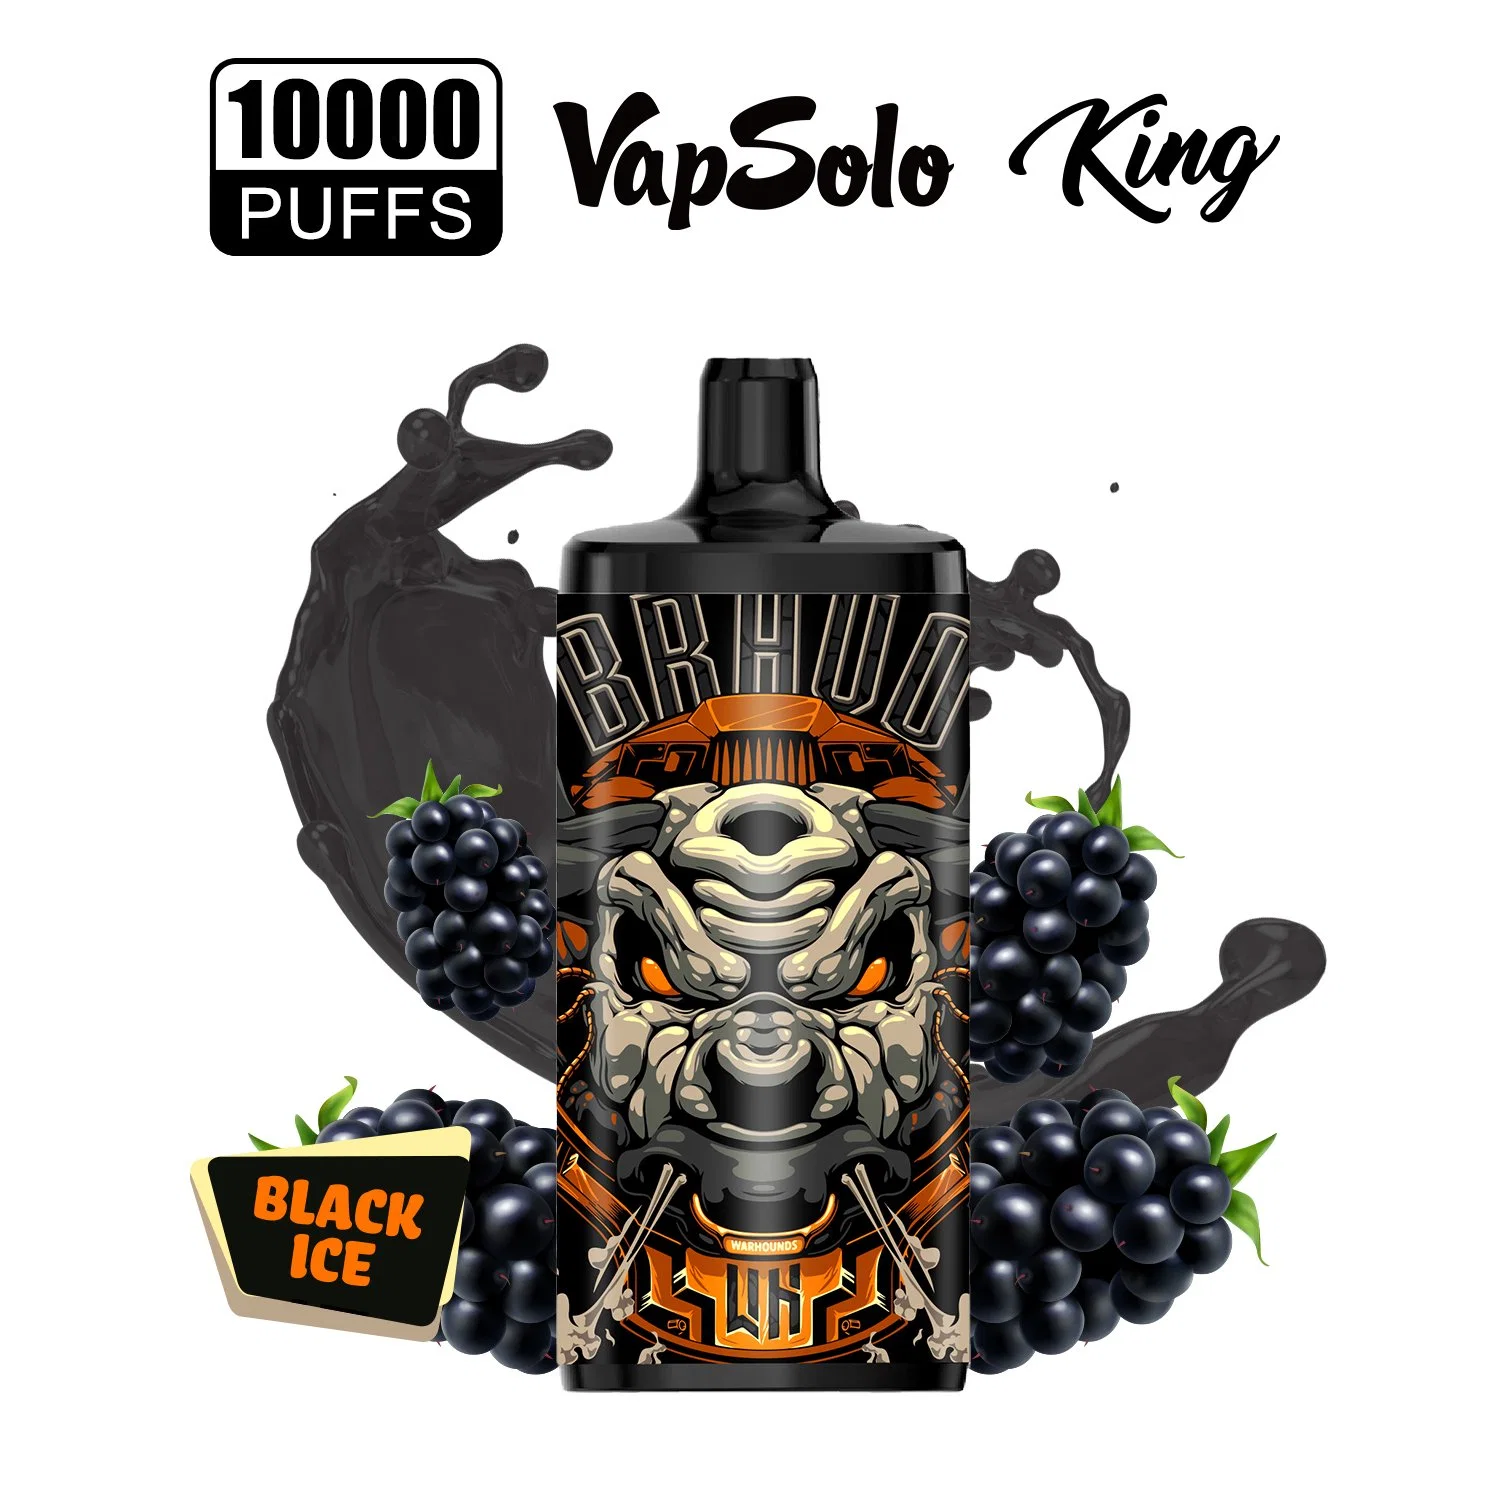 Bang King VVapSolo Последний одноразовый электронный Eigarette King Max 10000 Опуфы Randm Tornado 10000 puffs одноразовые обезьяны